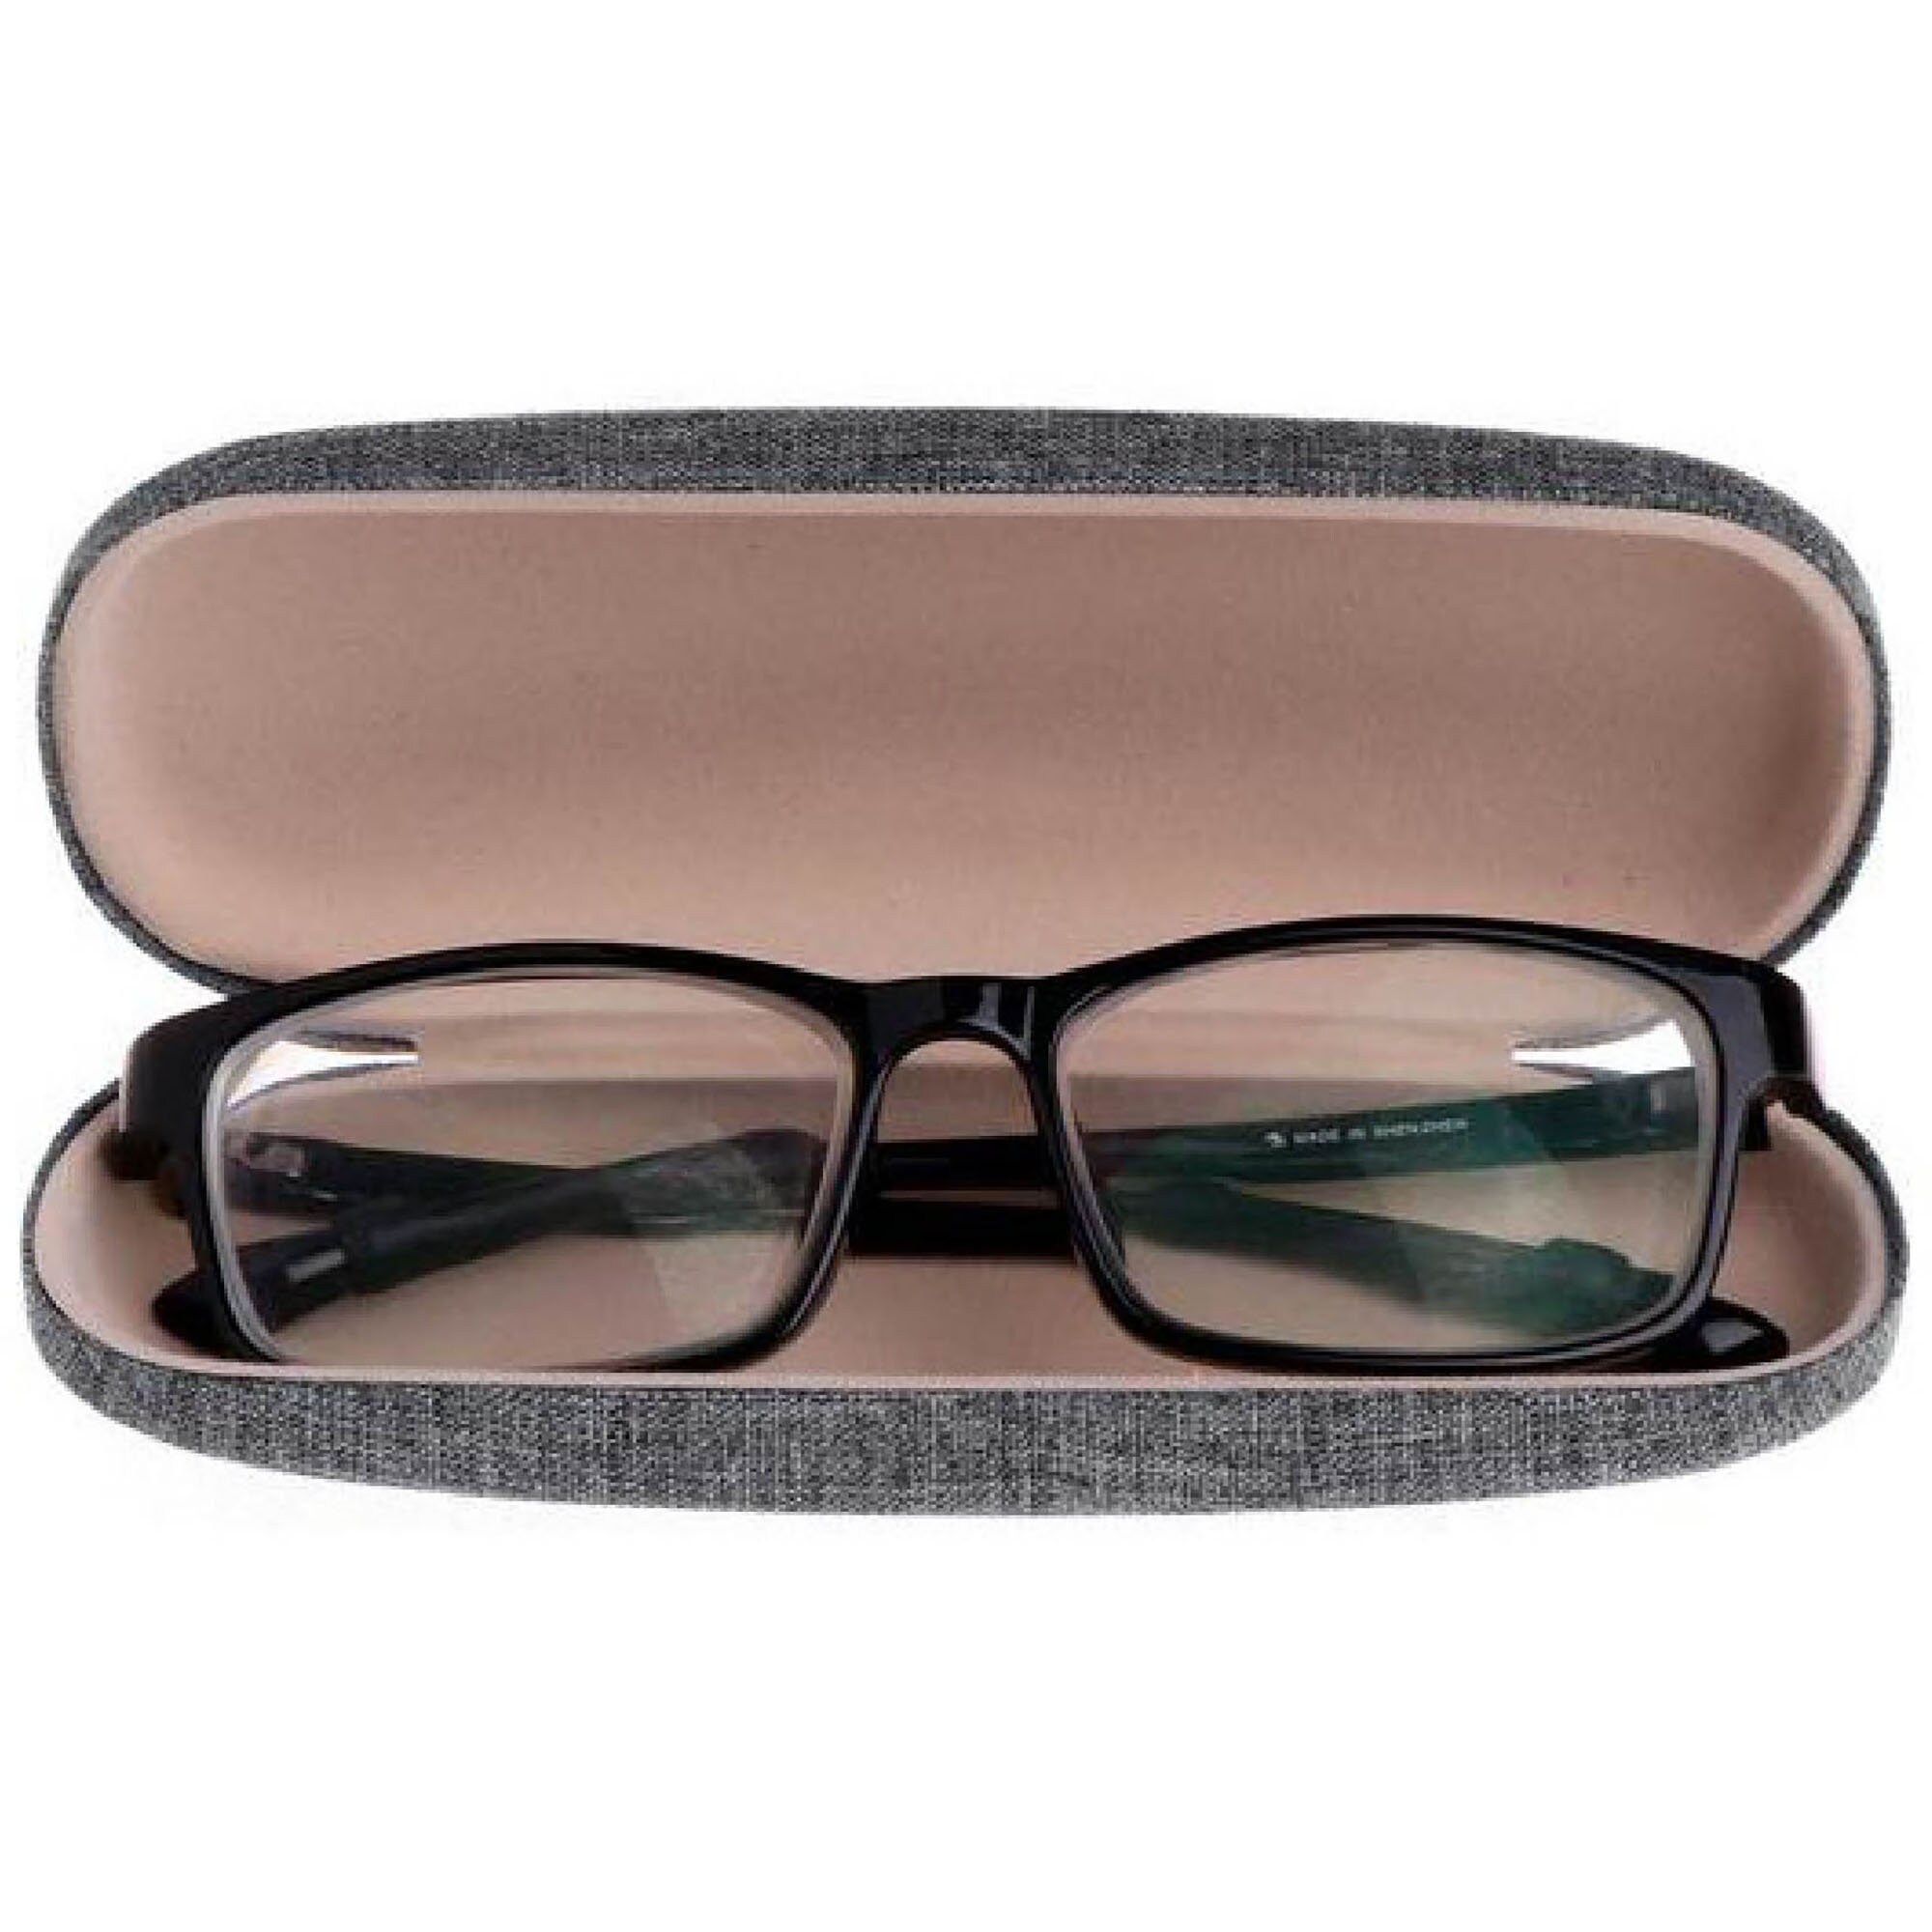 DINOSAUR TRICERATOPS brand new Metal Glasses Case ideal gift for Christmas 